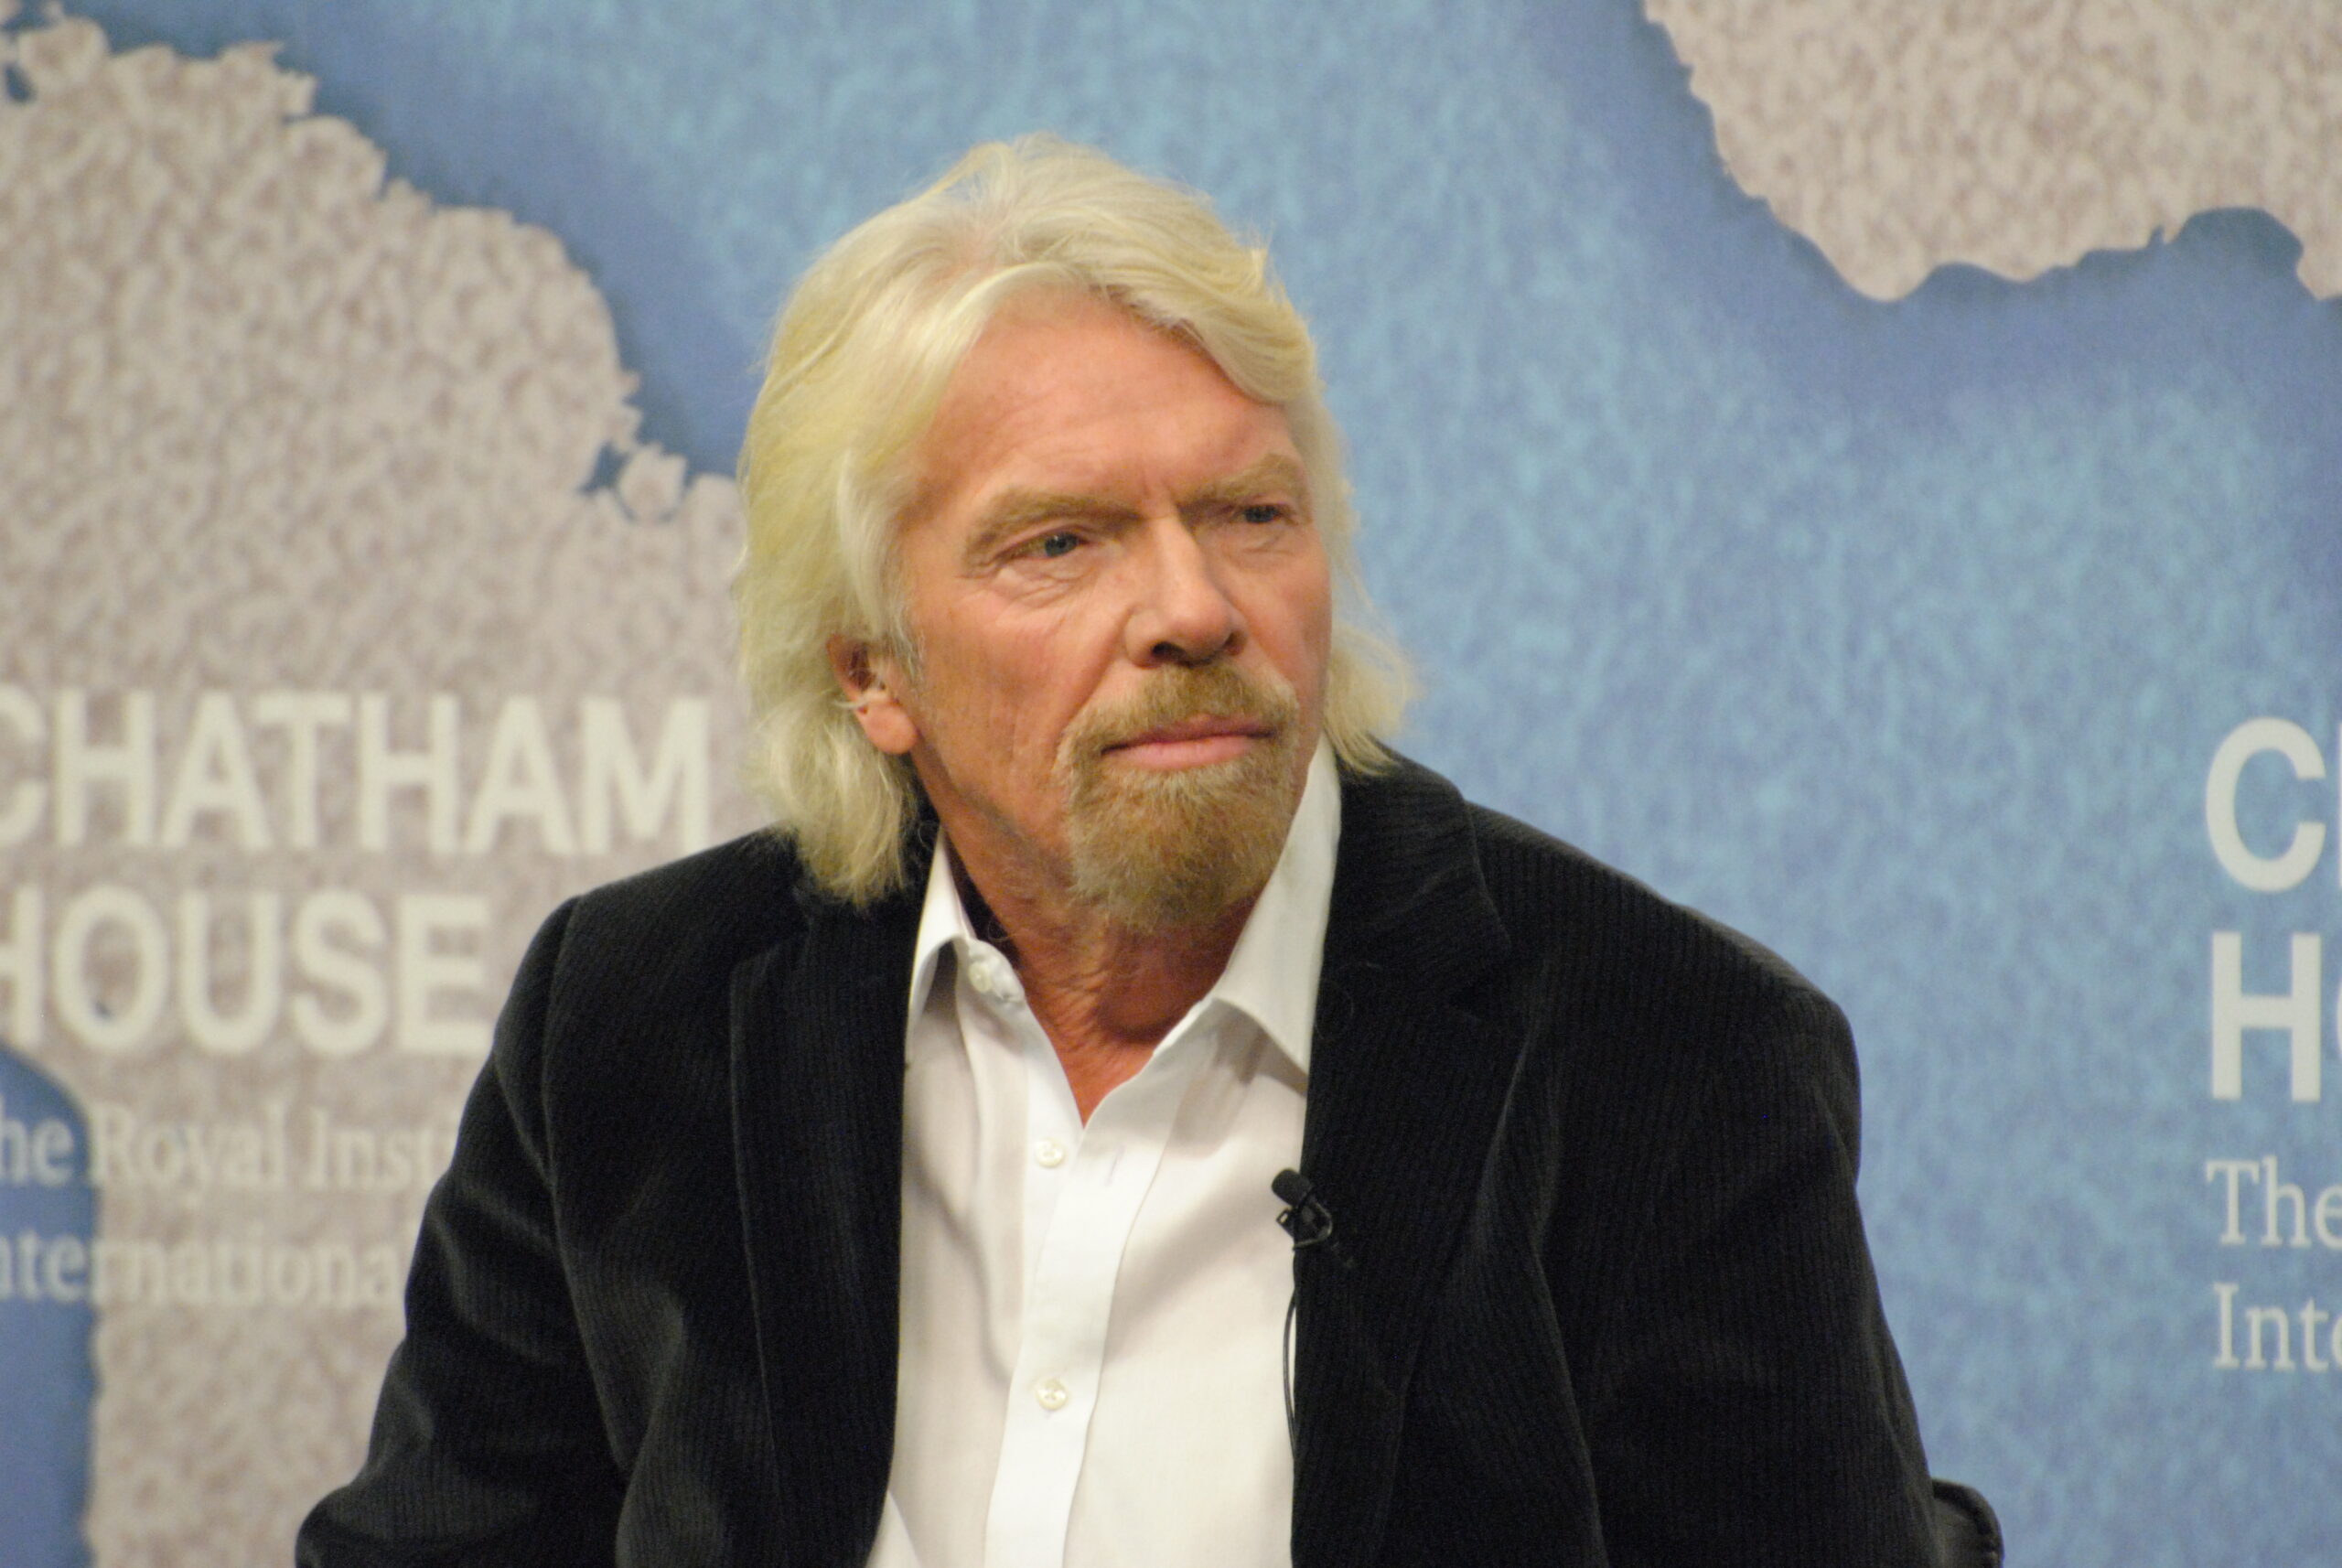 The Head of Virgin Group Sir Richard Branson to Join SATELLITE 2021 Keynote